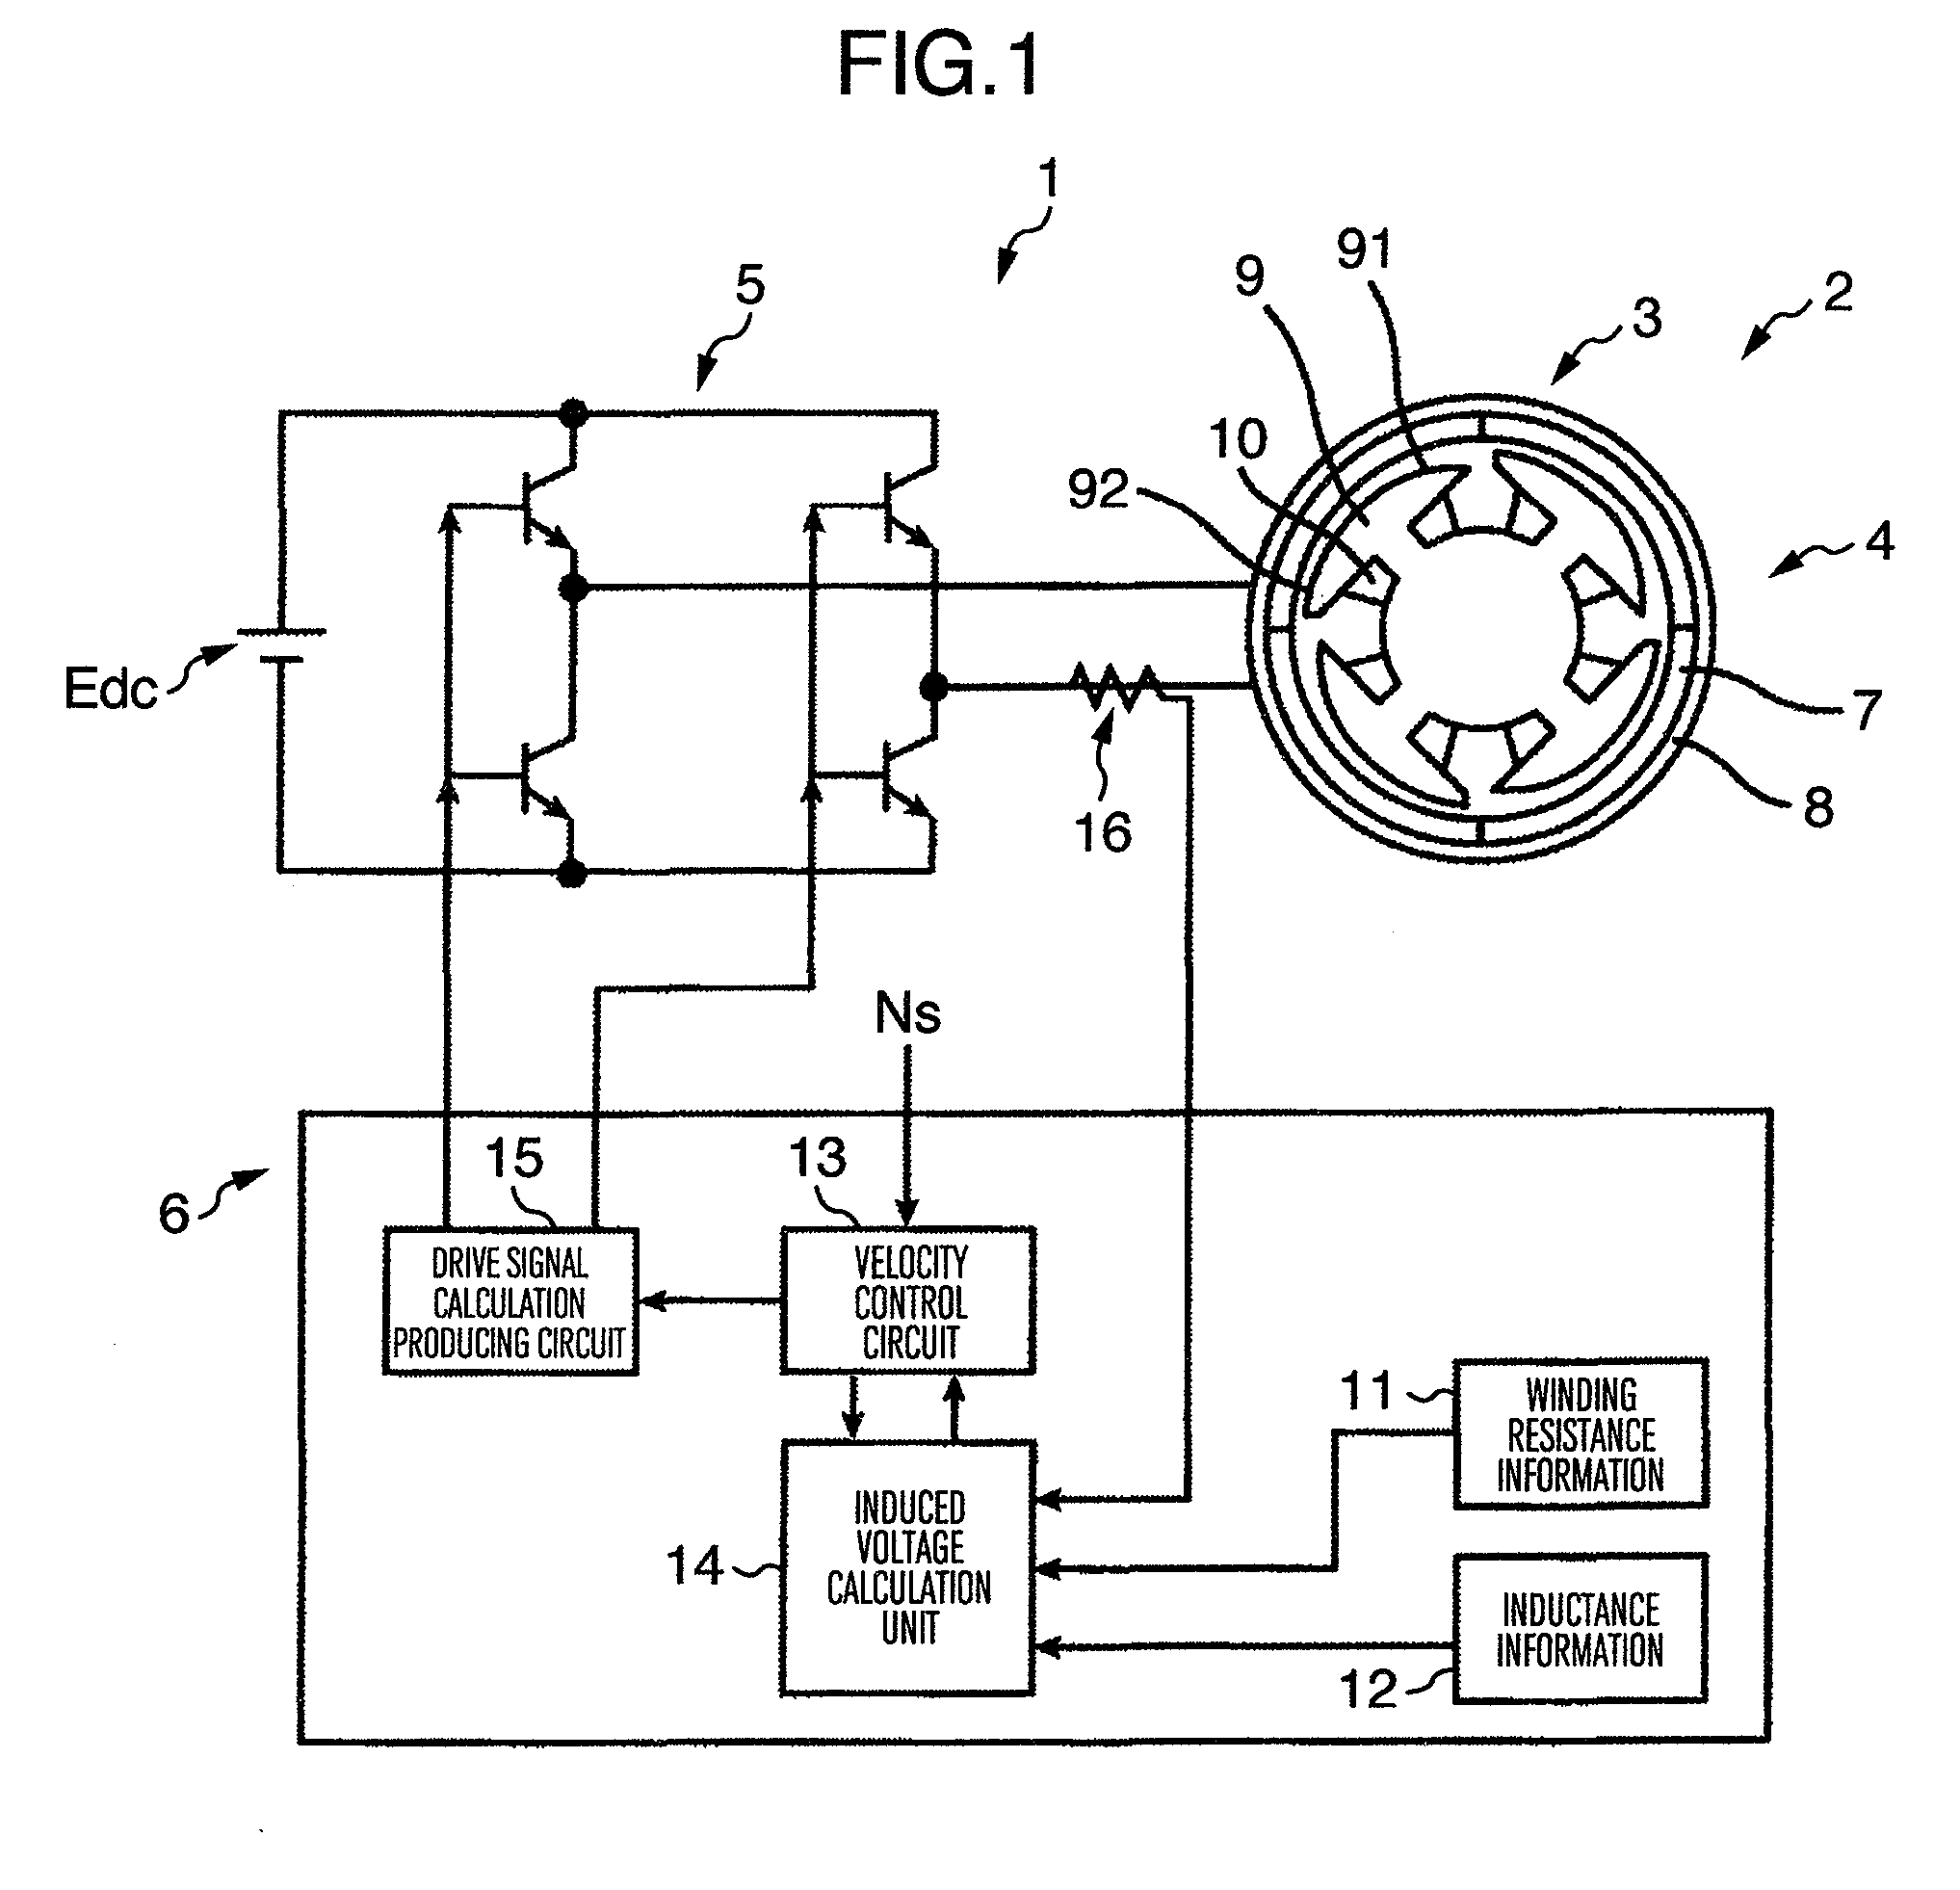 Single-phase position sensorless permanent magnet motor control apparatus